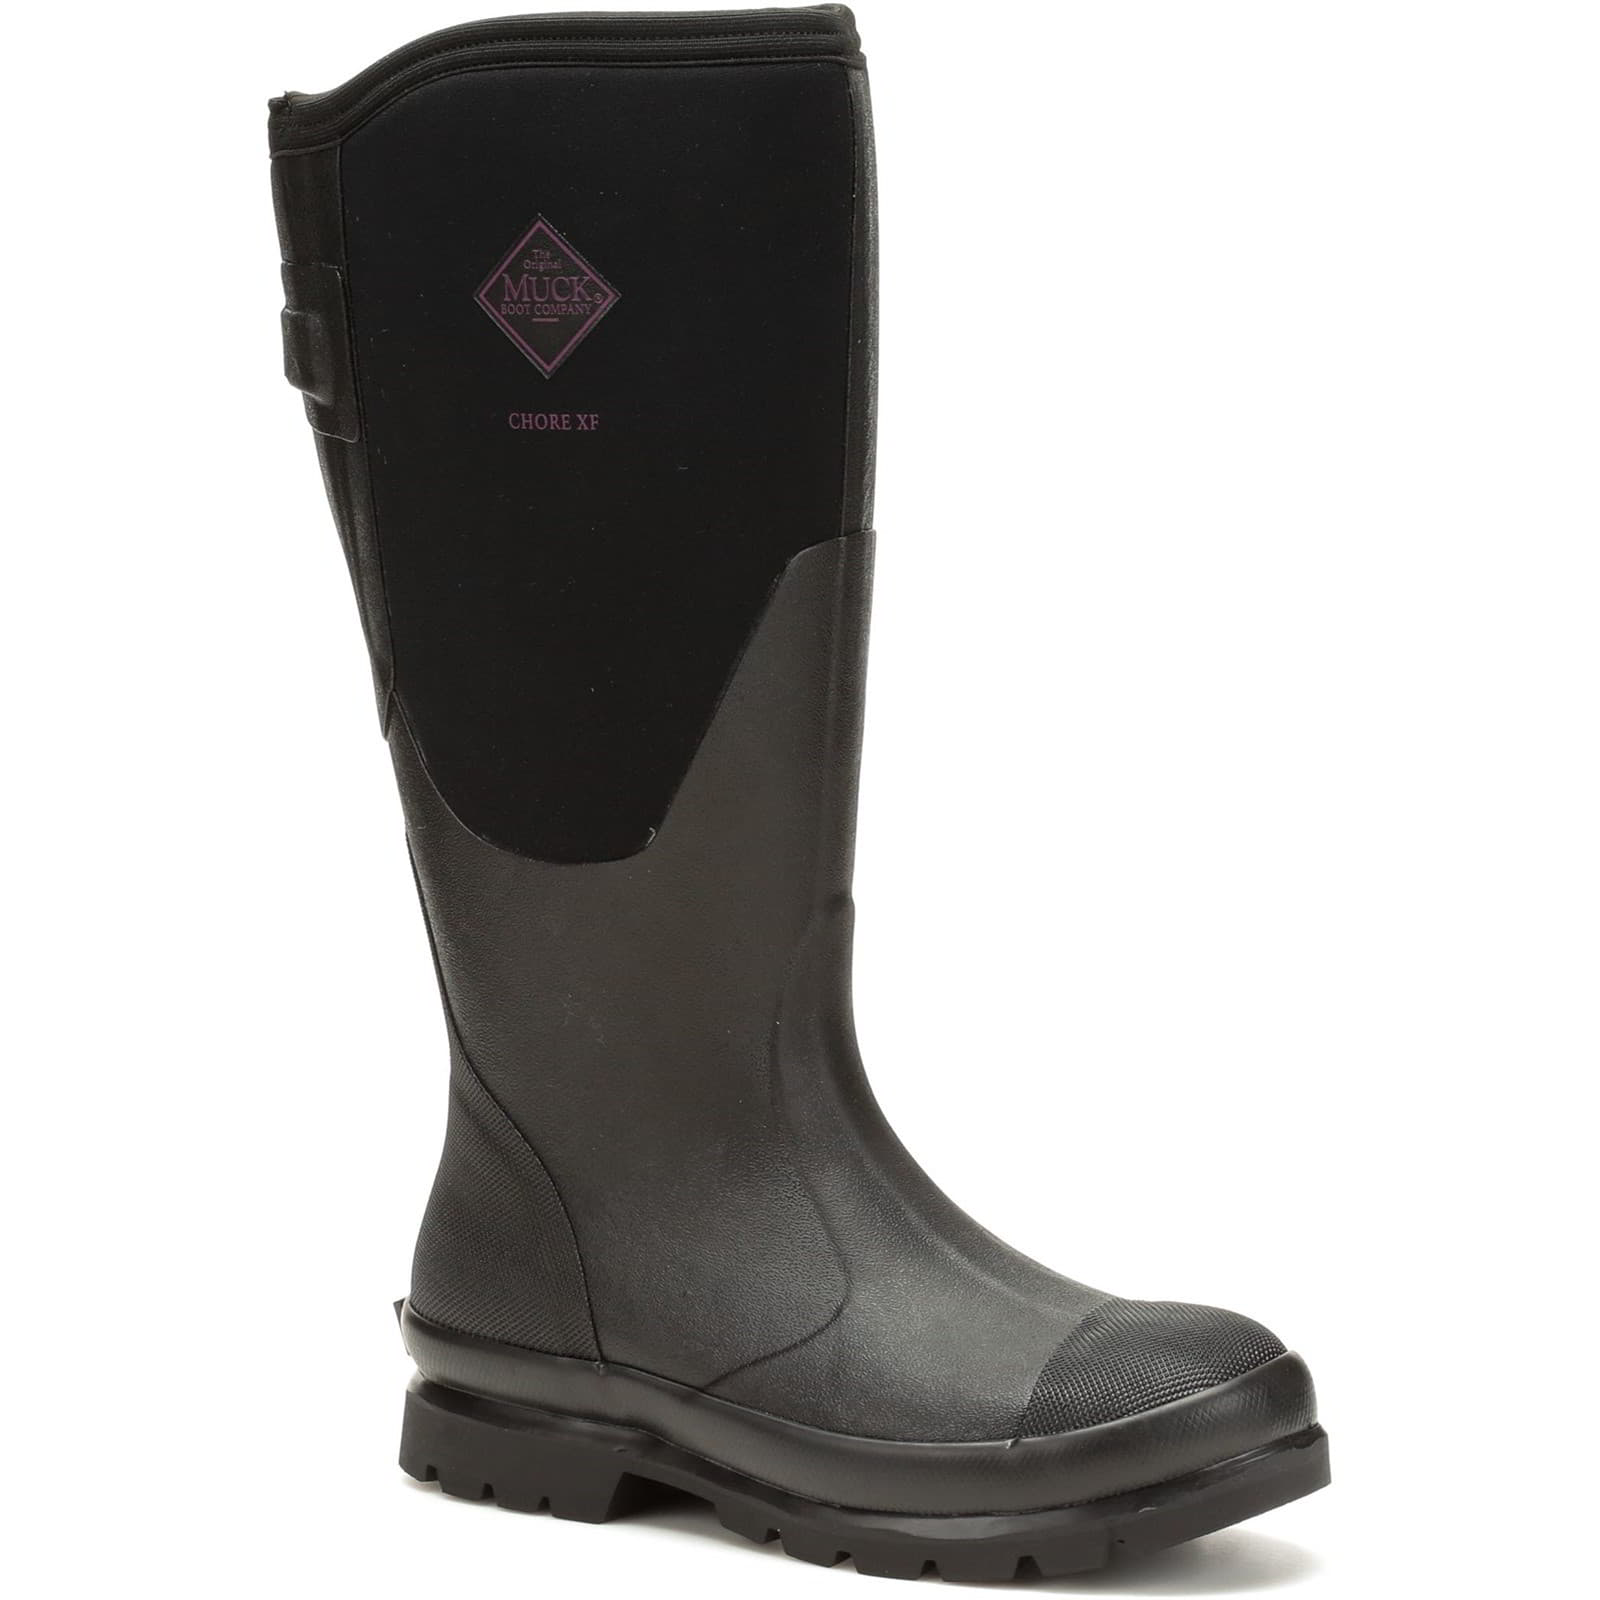 Muck Boots Women's Chore Adjustable Tall Neoprene Wellington Boots Wellies - UK 5